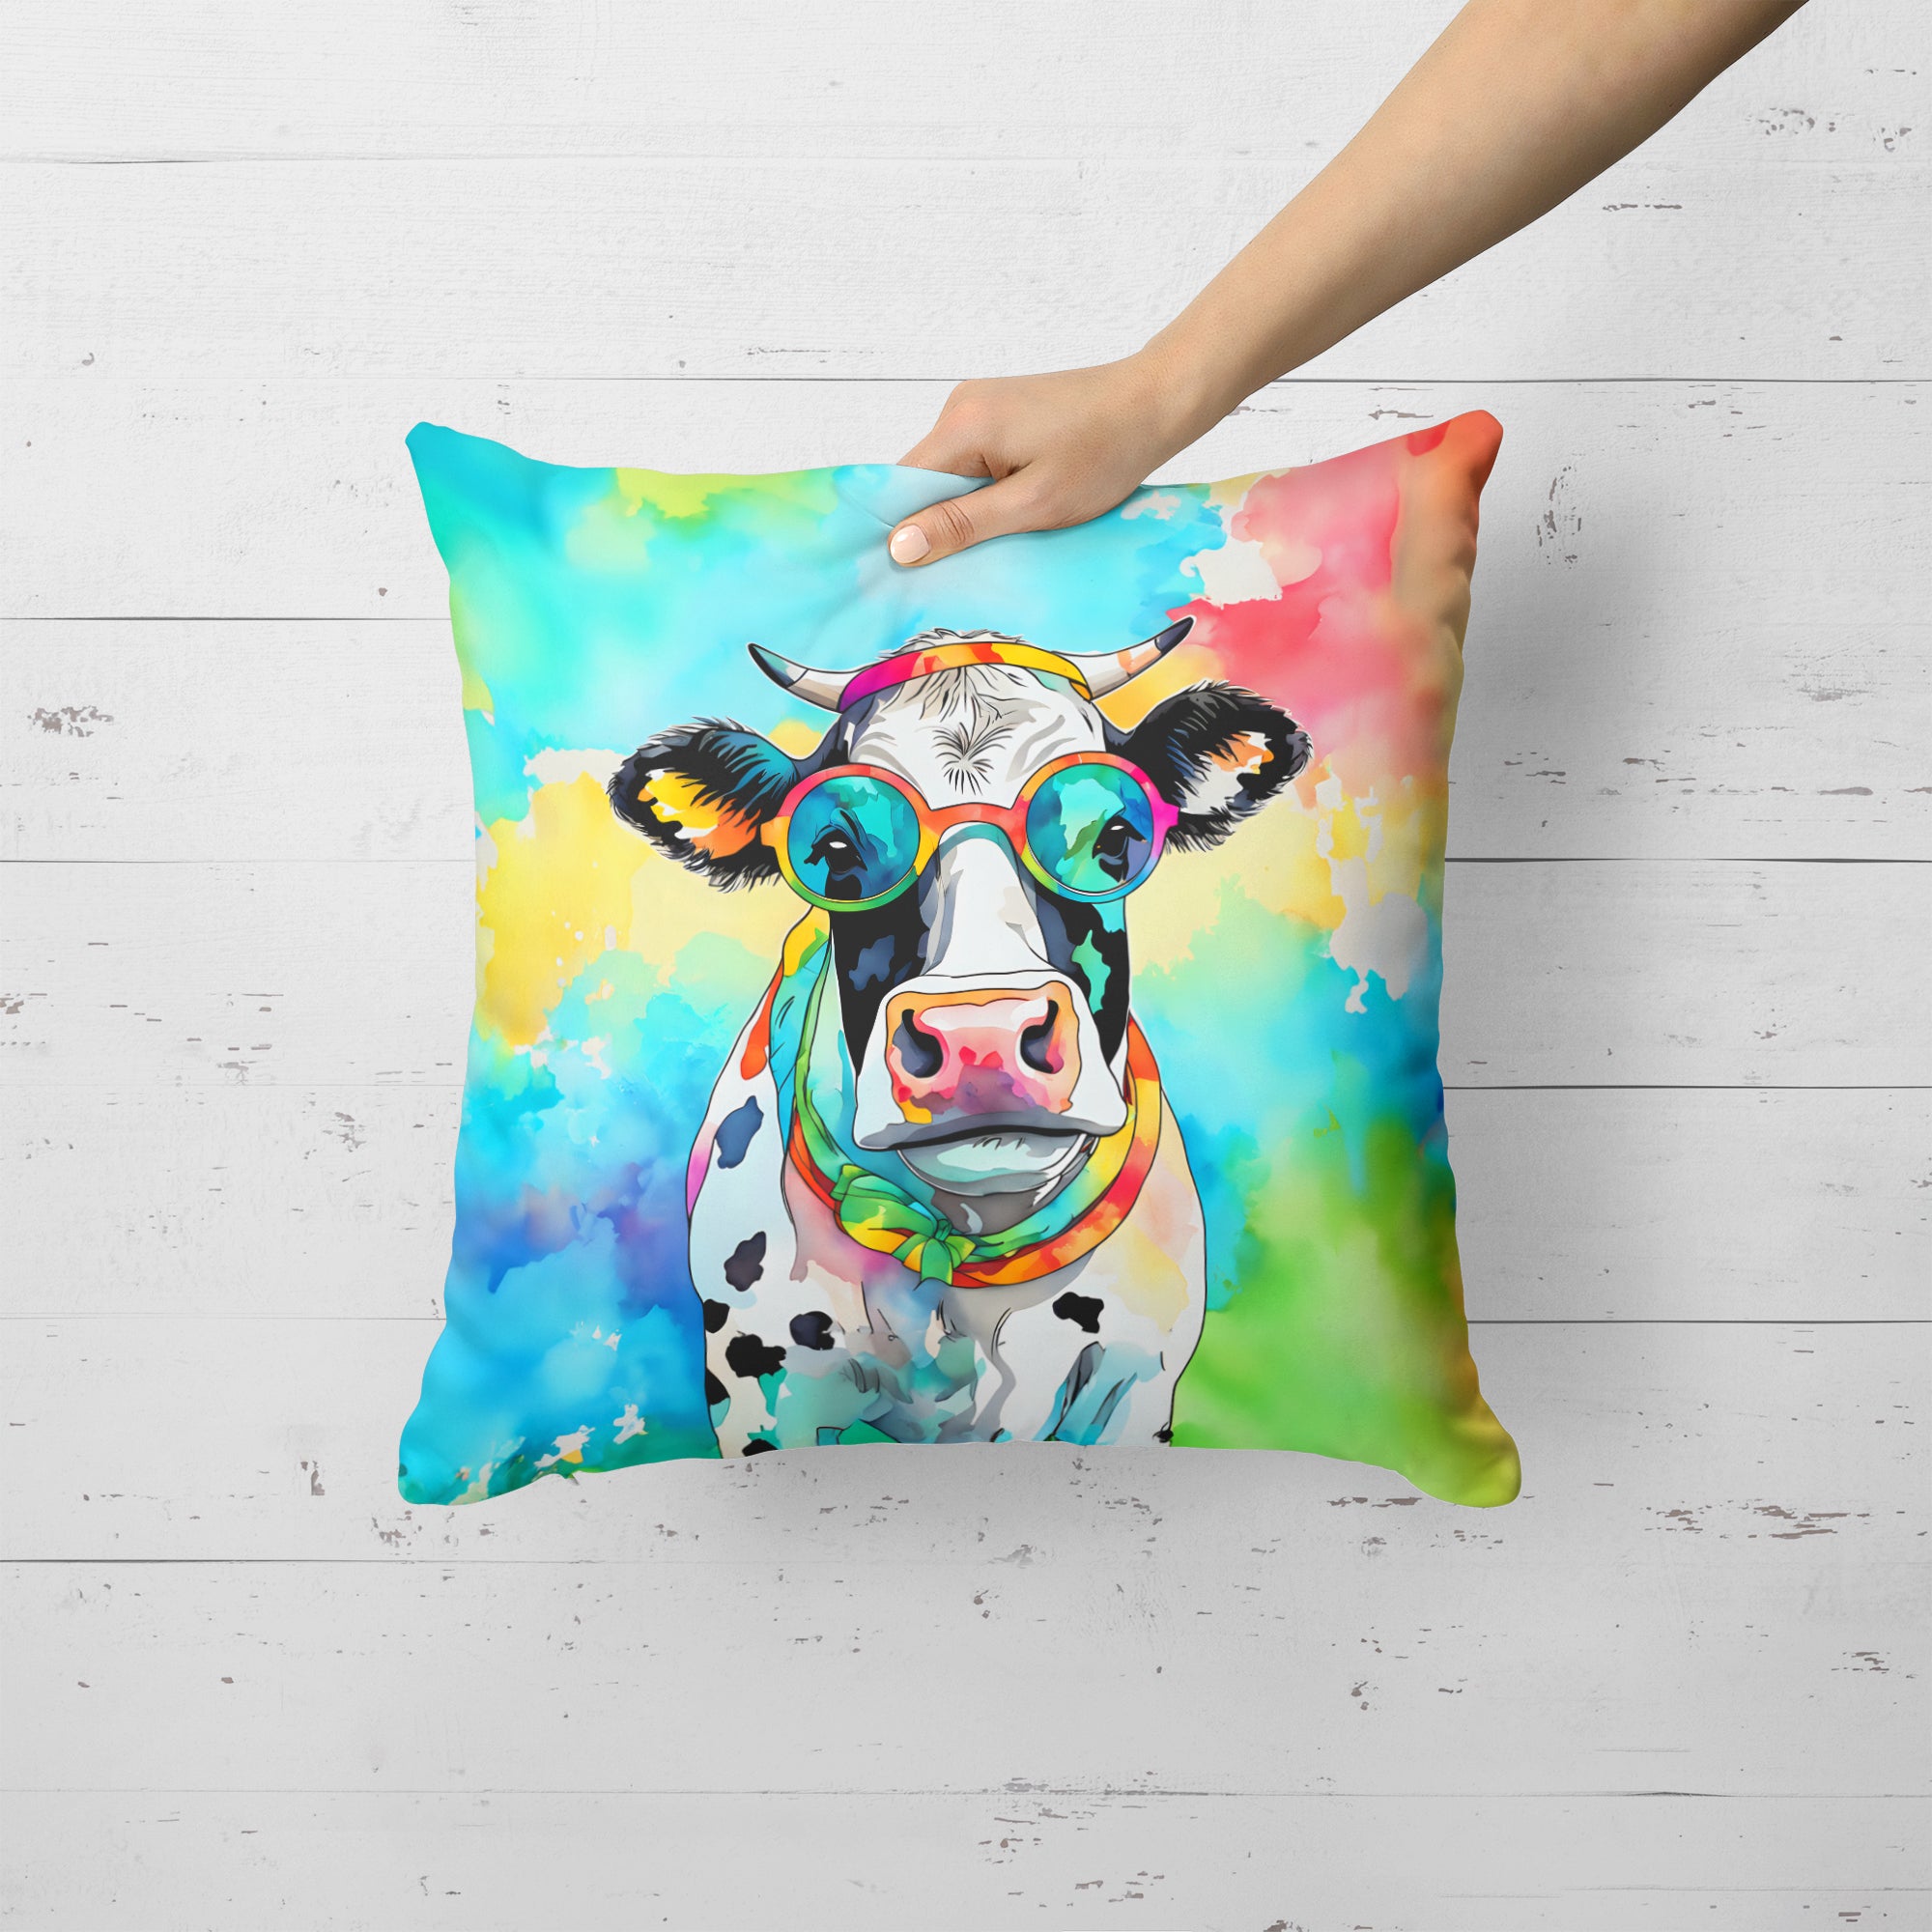 Buy this Hippie Animal Cow Throw Pillow